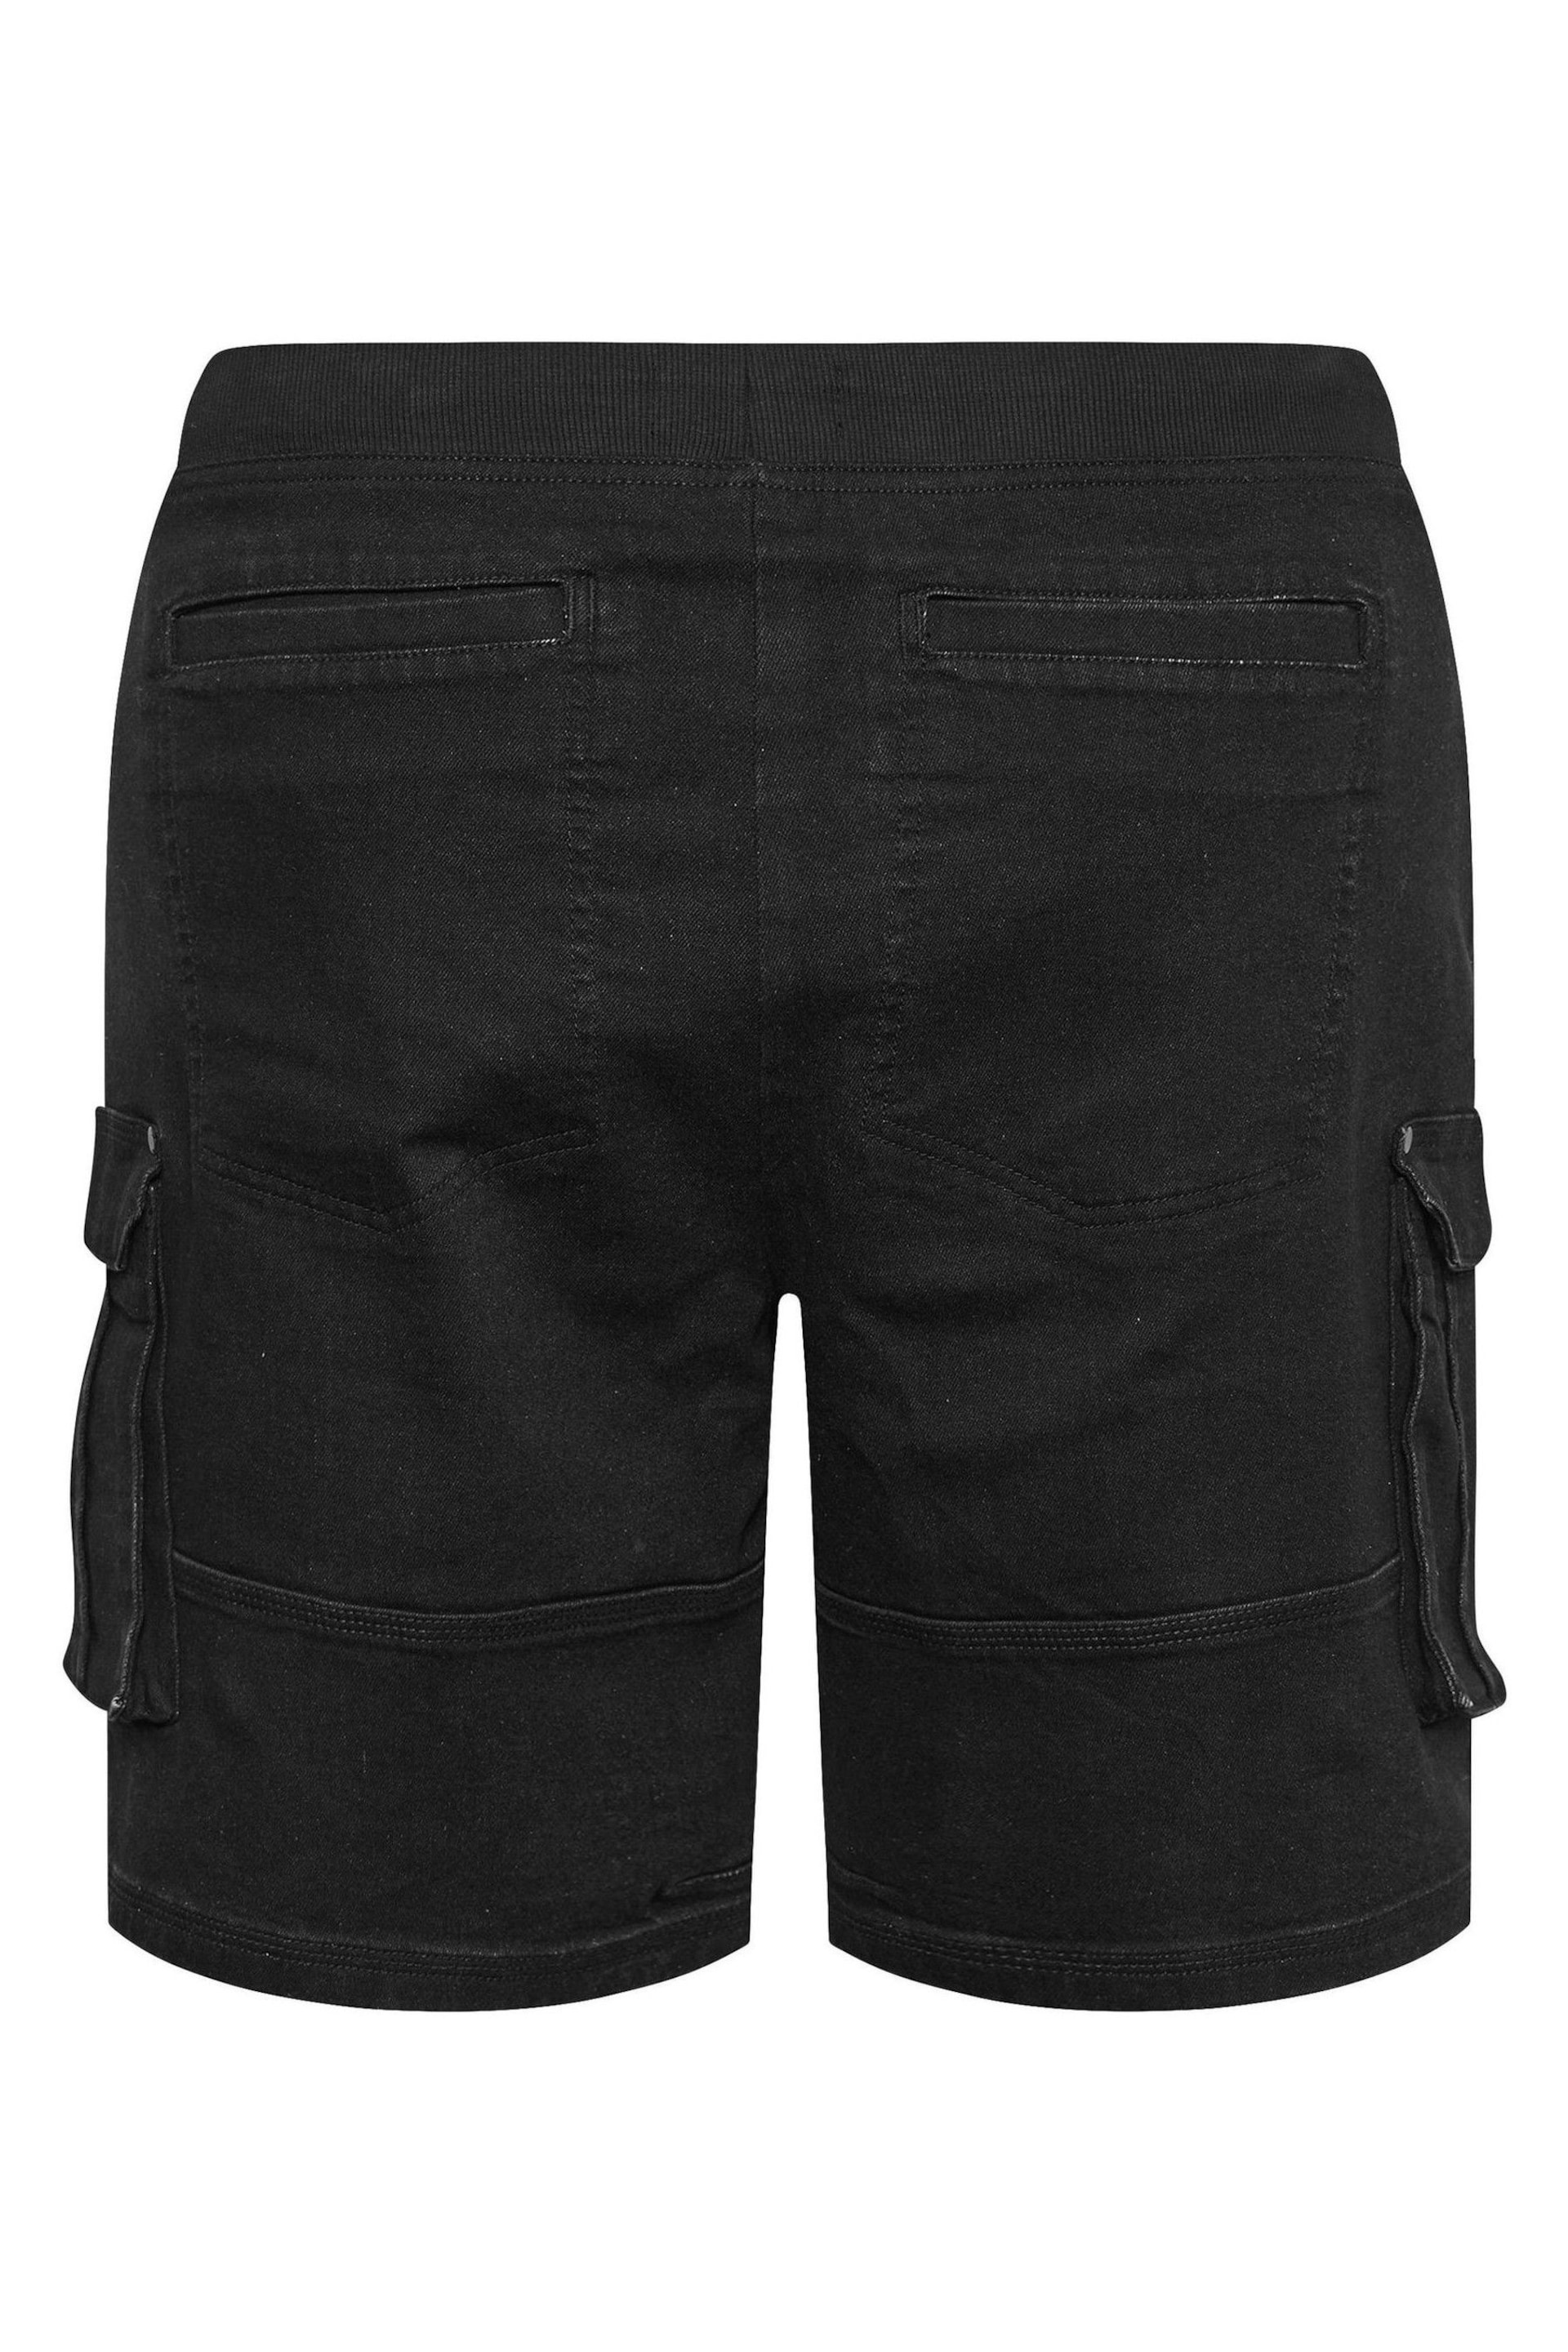 BadRhino Big & Tall Black Elasticated Waist Denim Shorts - Image 5 of 5